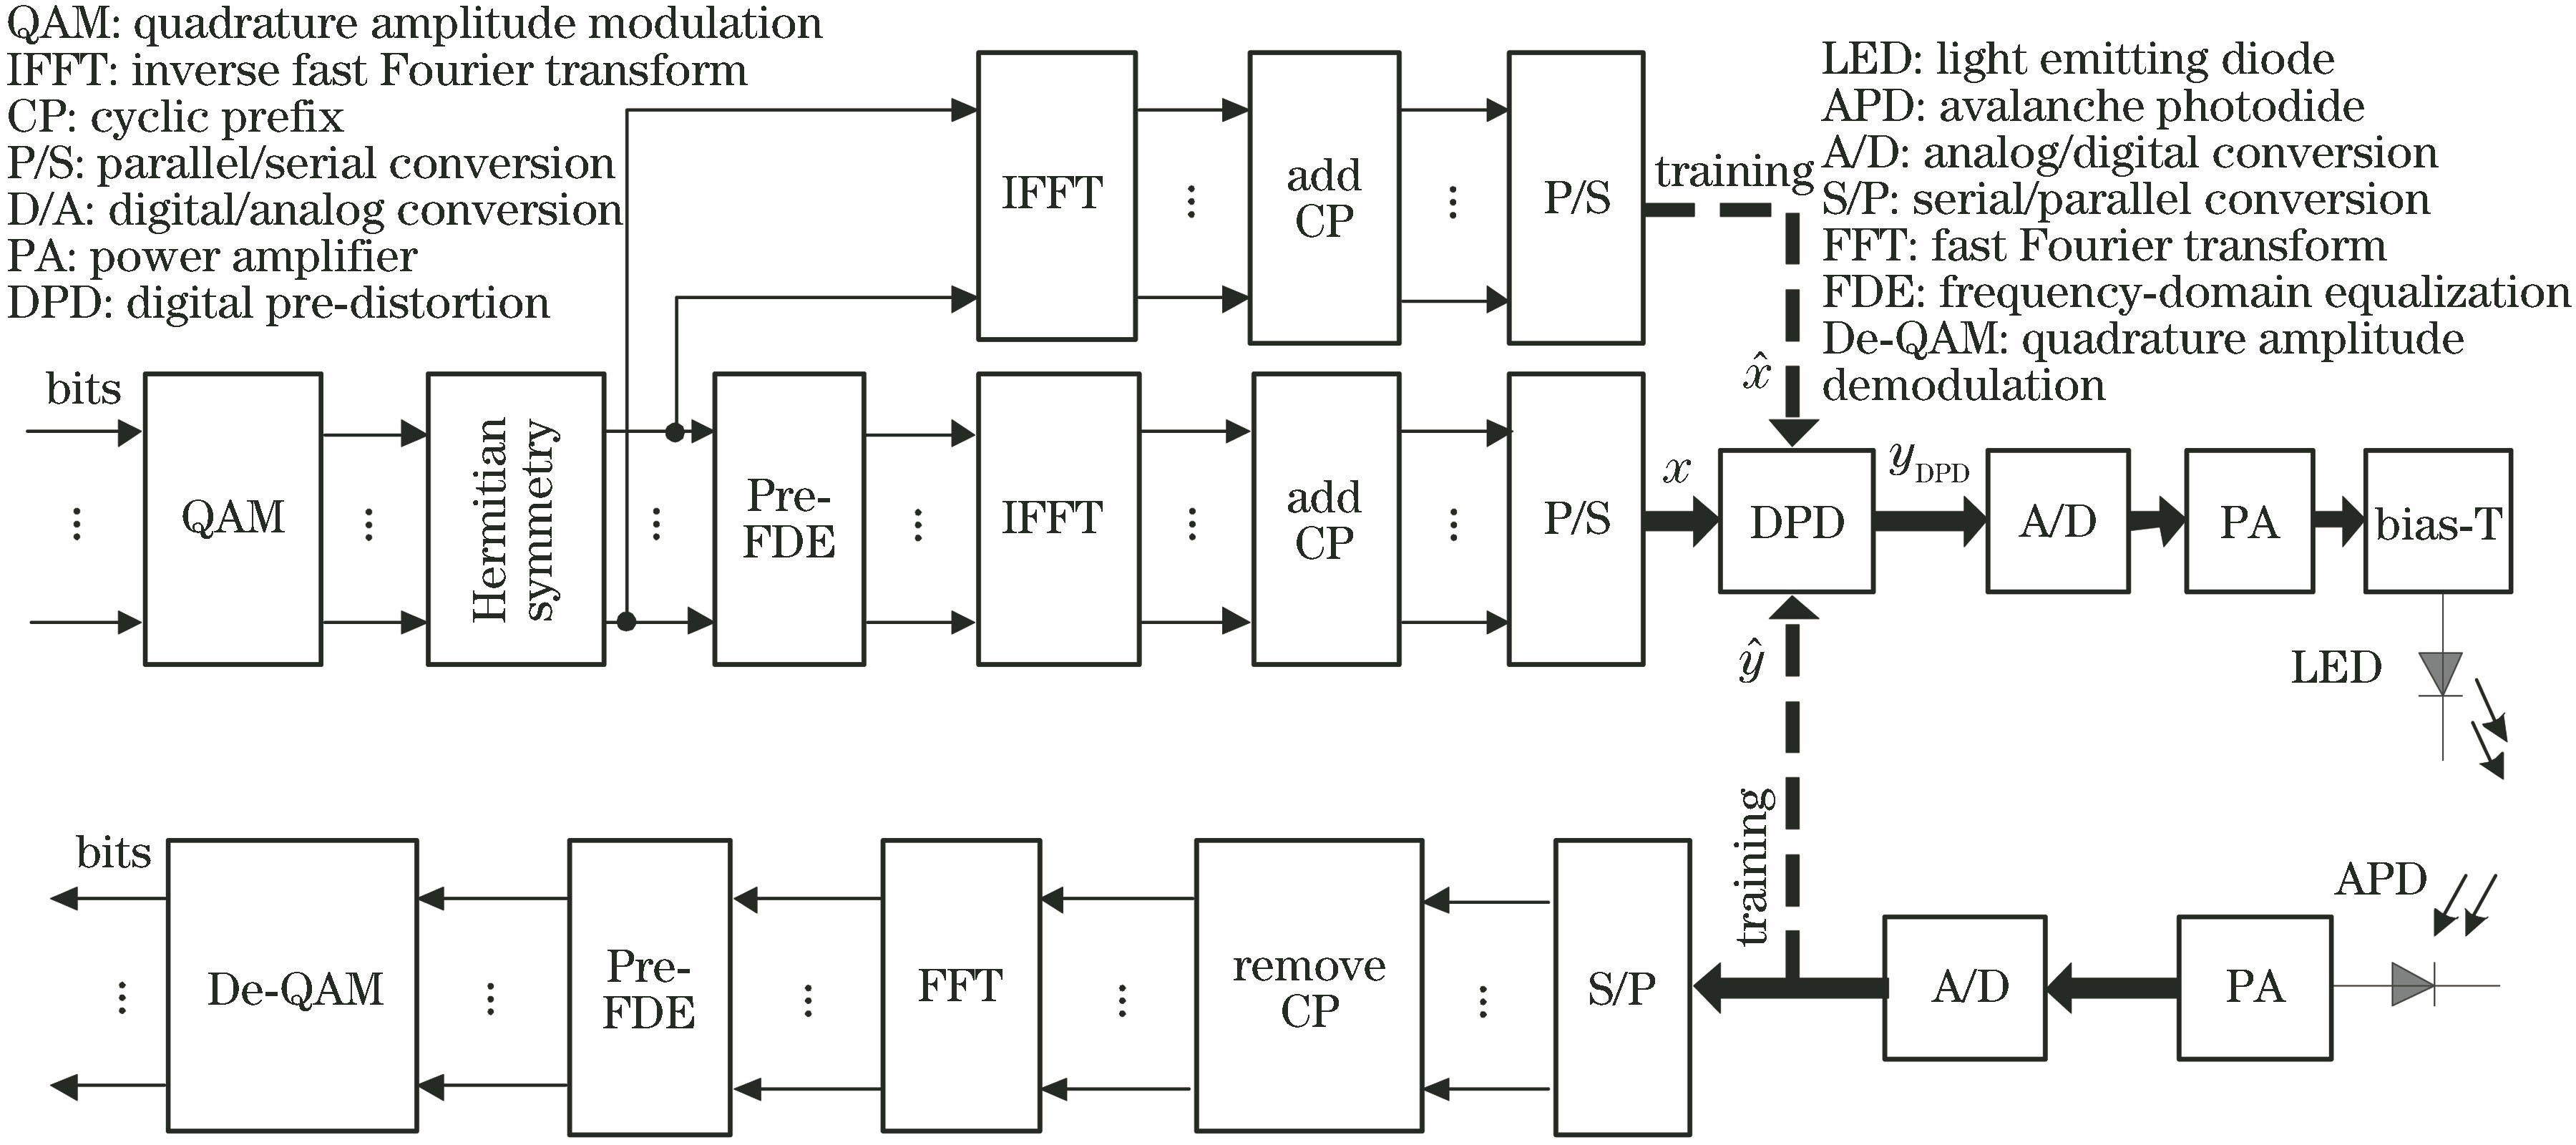 Block diagram of DPD based OFDM system